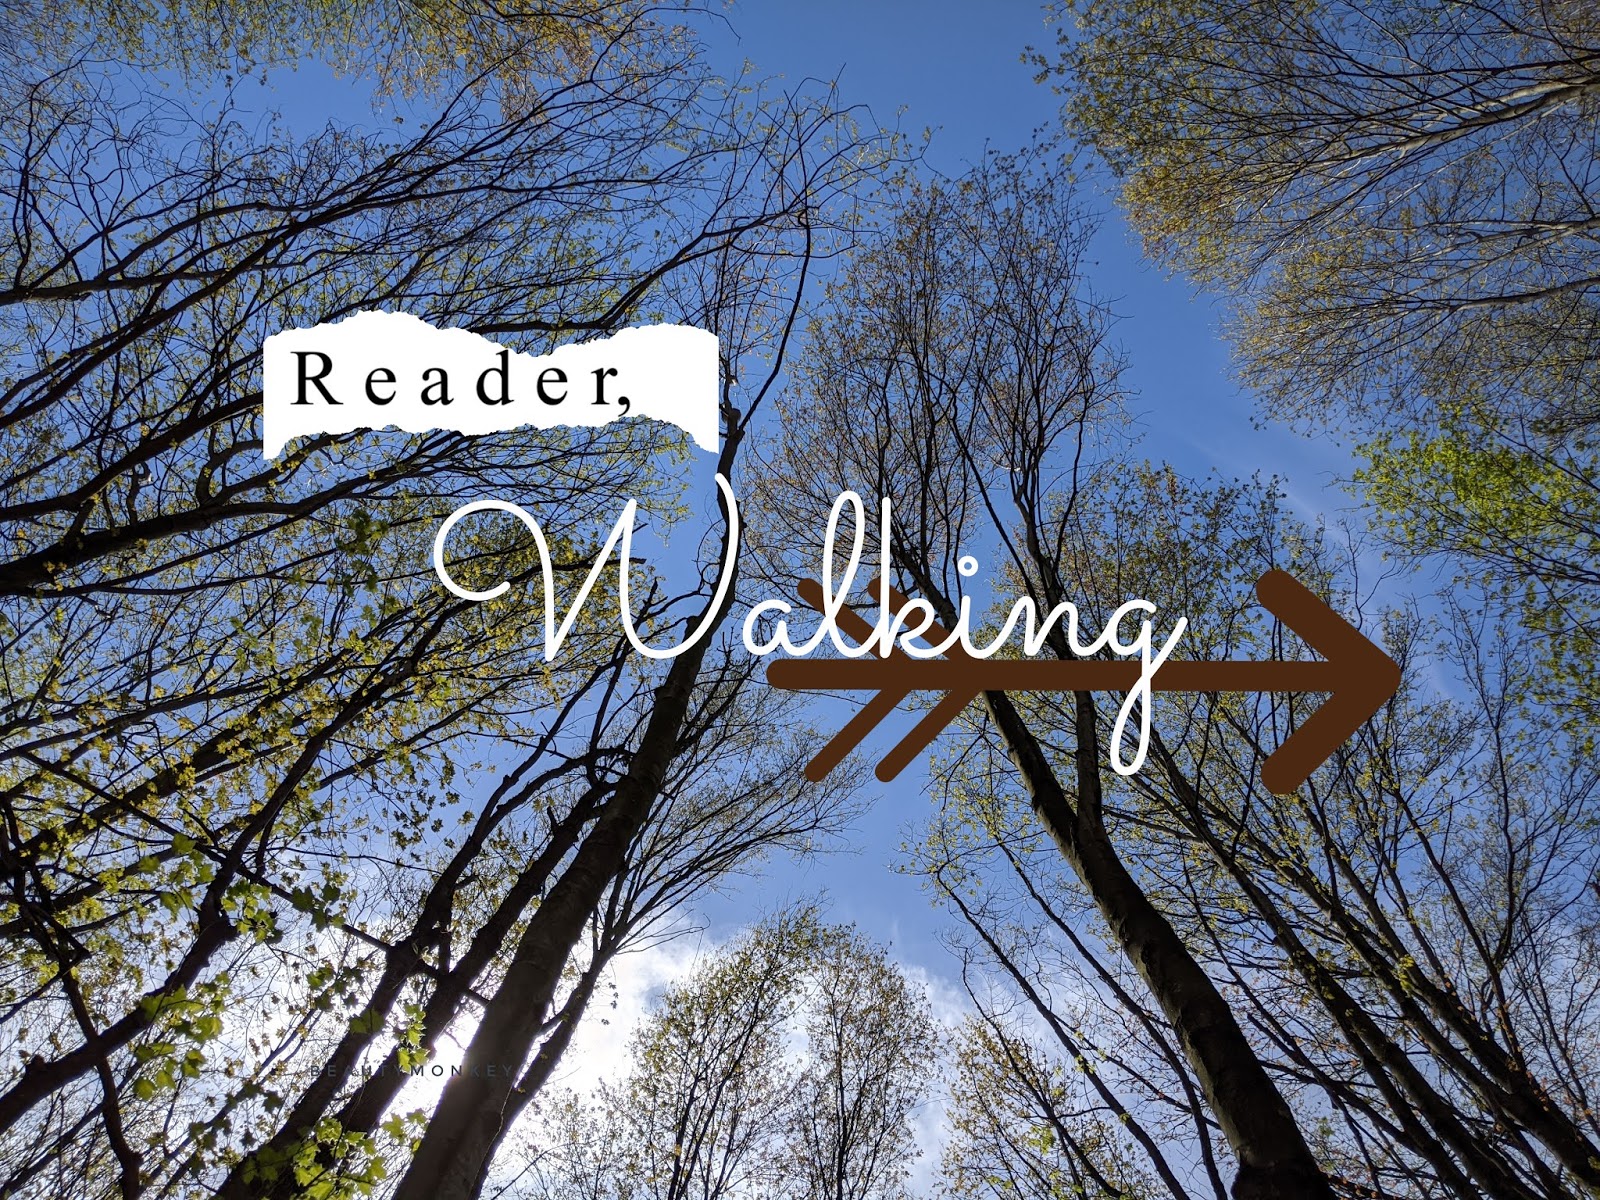 Reader, Walking